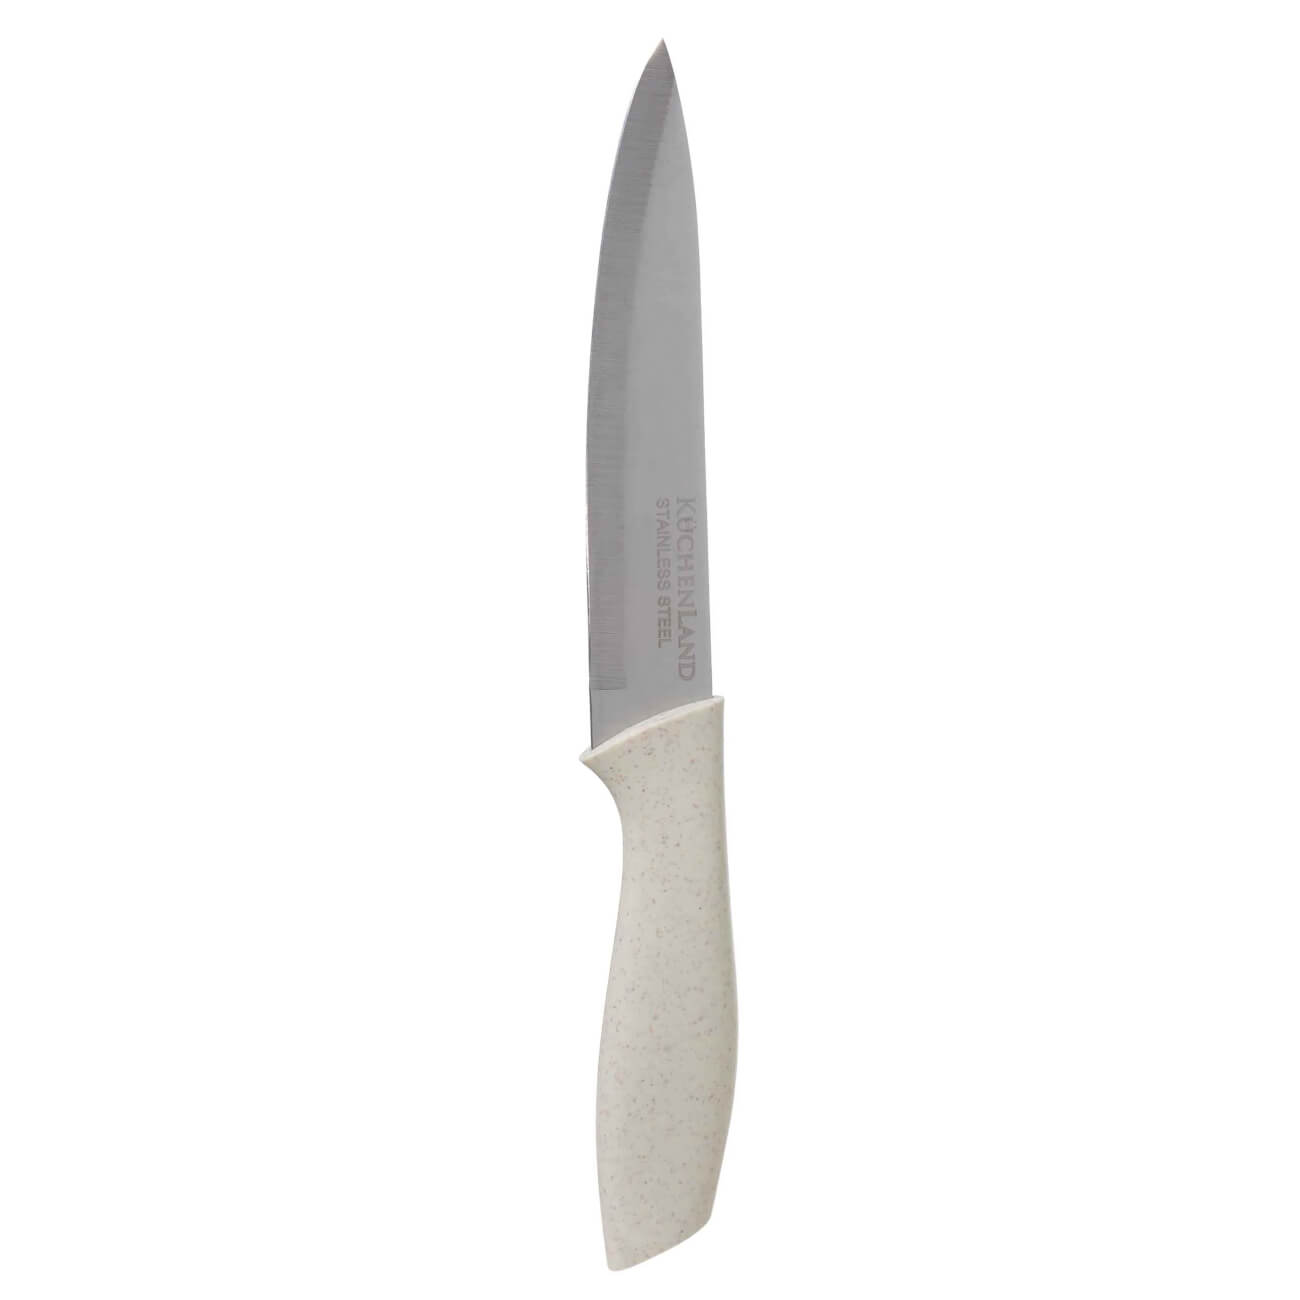 Нож для нарезки, 15 см, сталь/пластик, молочный, Speck-light нож поварской 20 см сталь пластик молочный speck light